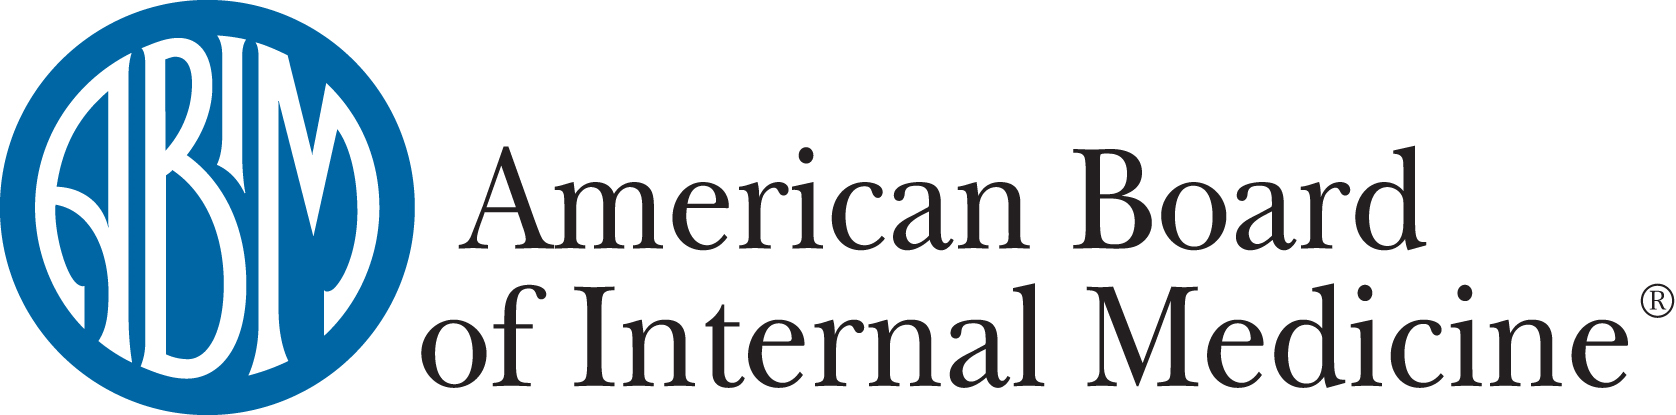 American Board of Internal Medicine Company Logo